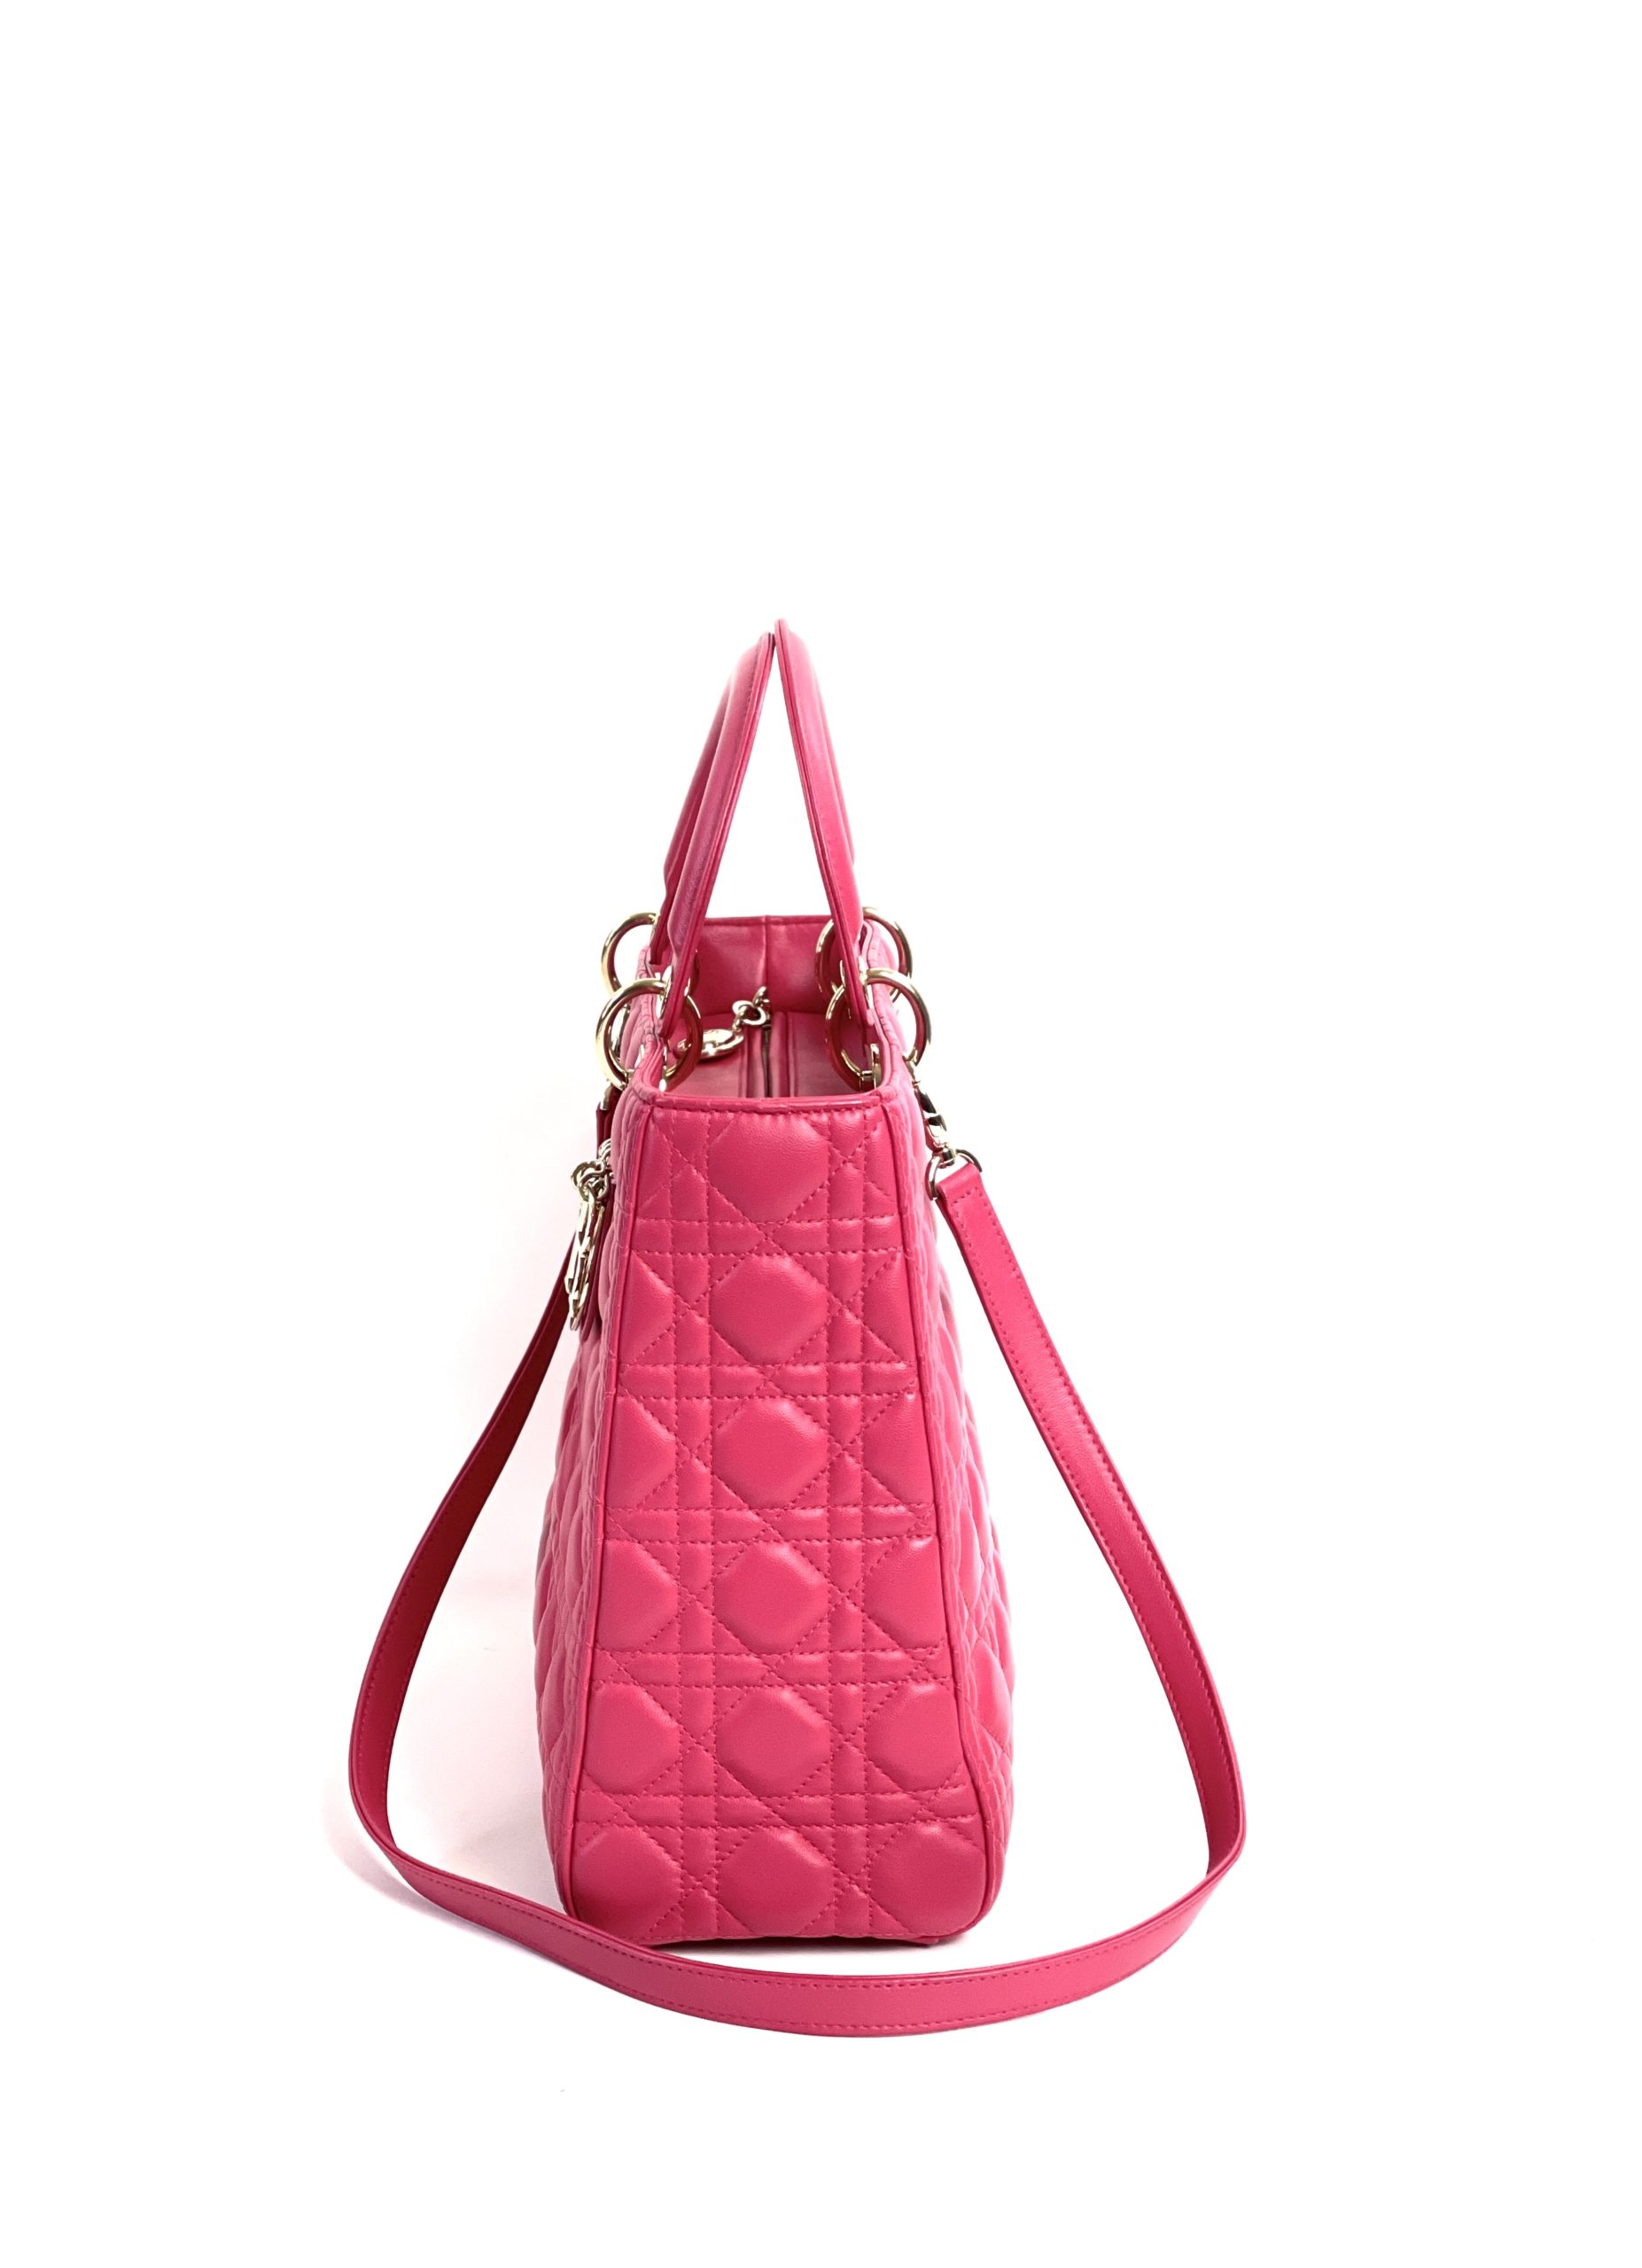 CHRISTIAN DIOR Bag - Cannage Pink Lambskin Lady Dior Bag